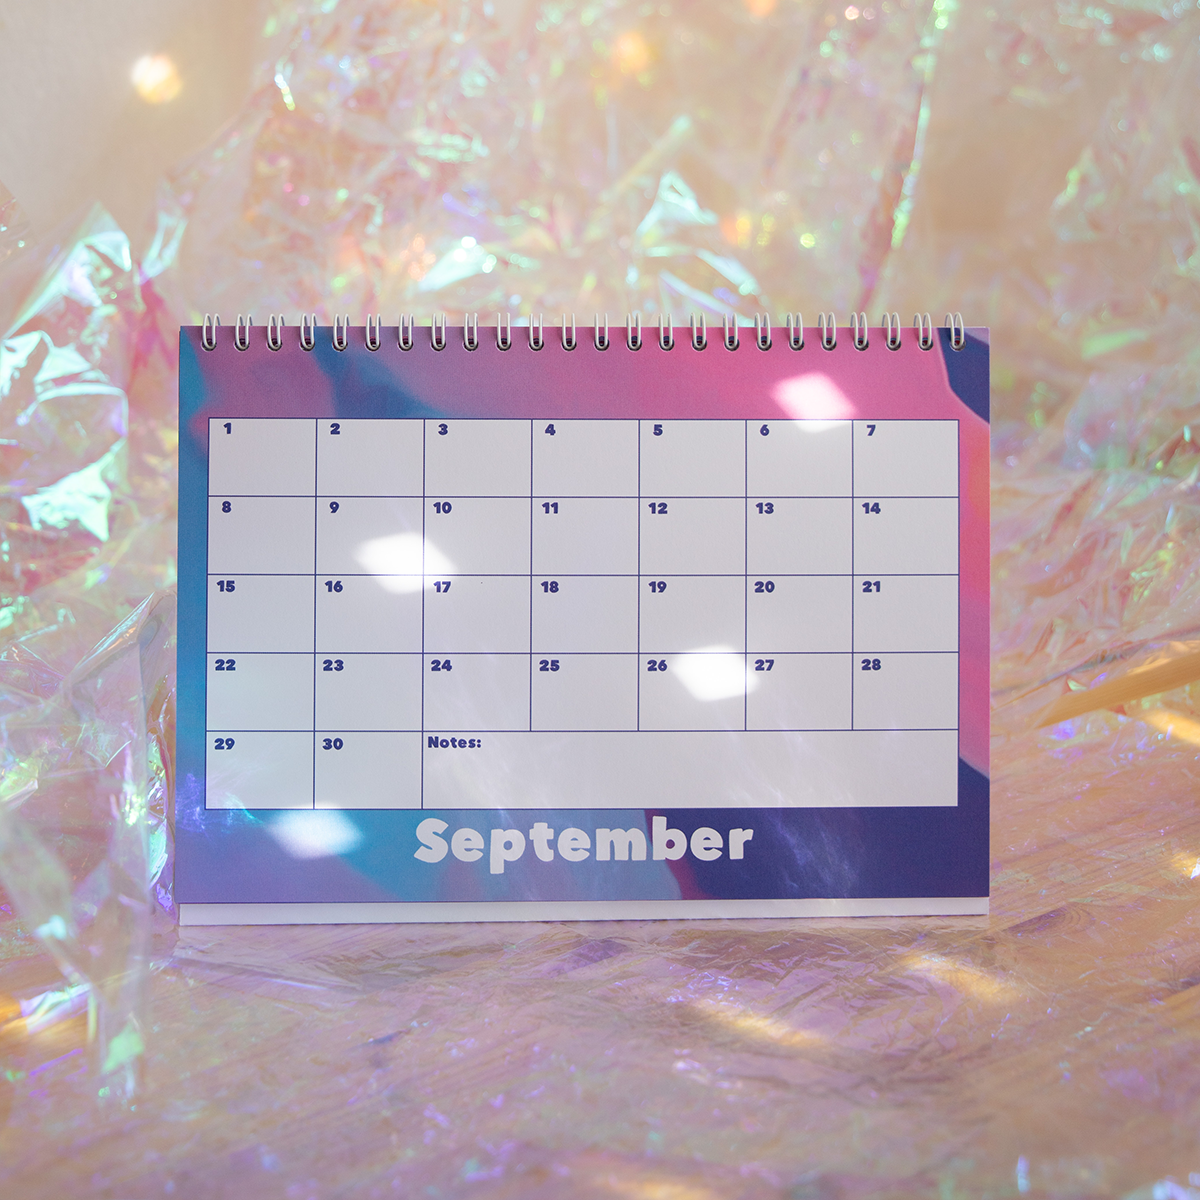 Celebration Calendar